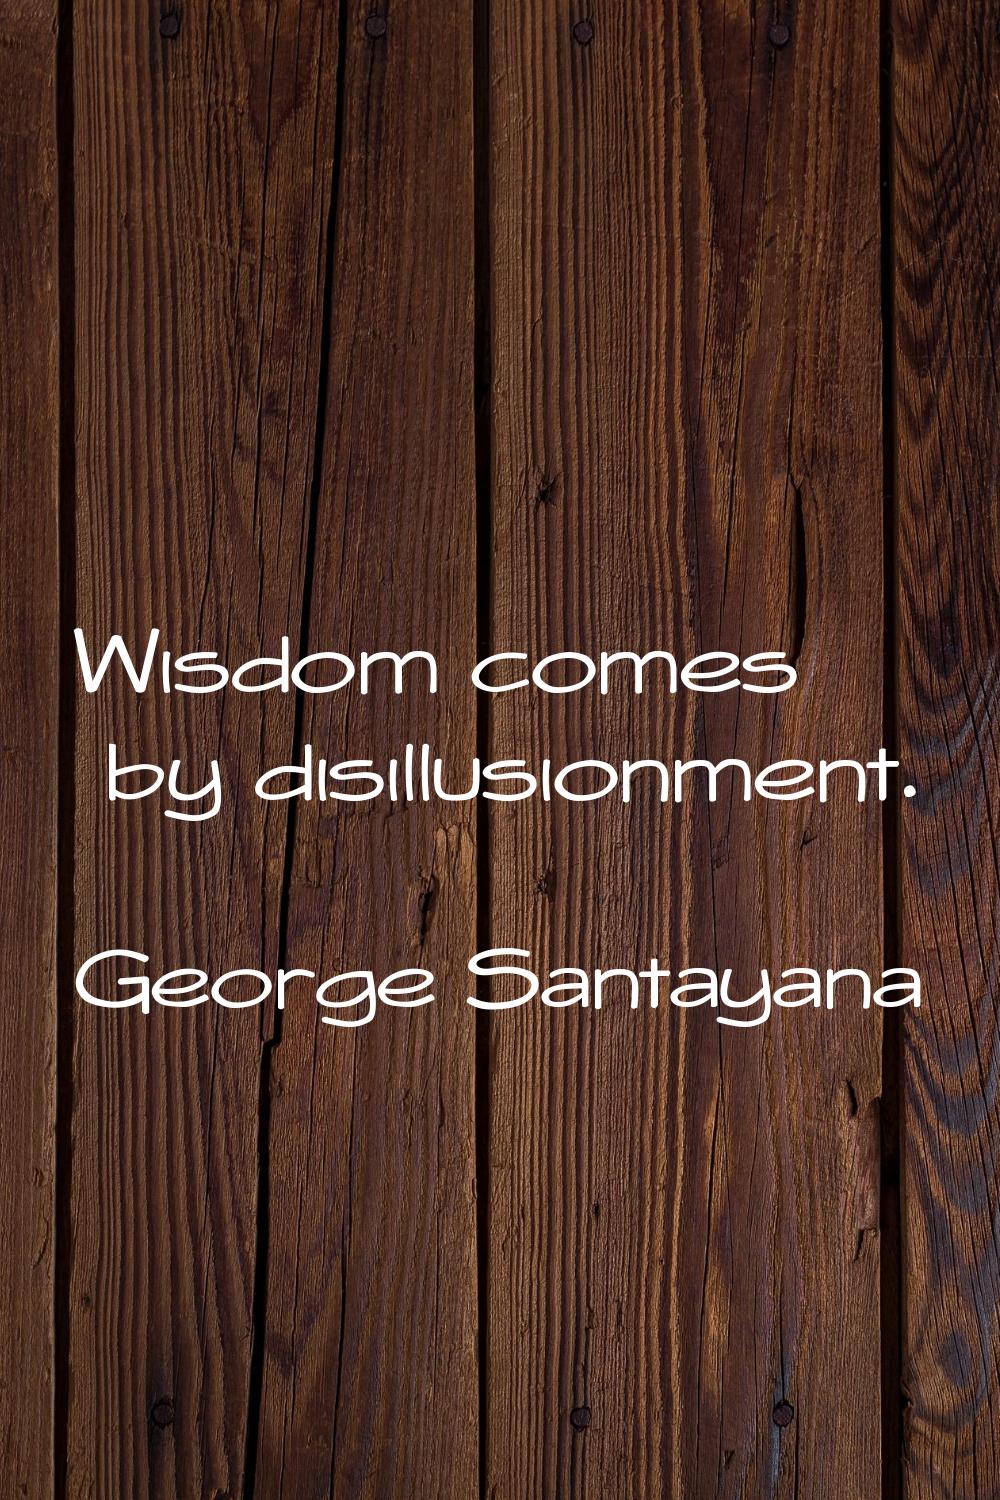 Wisdom comes by disillusionment.